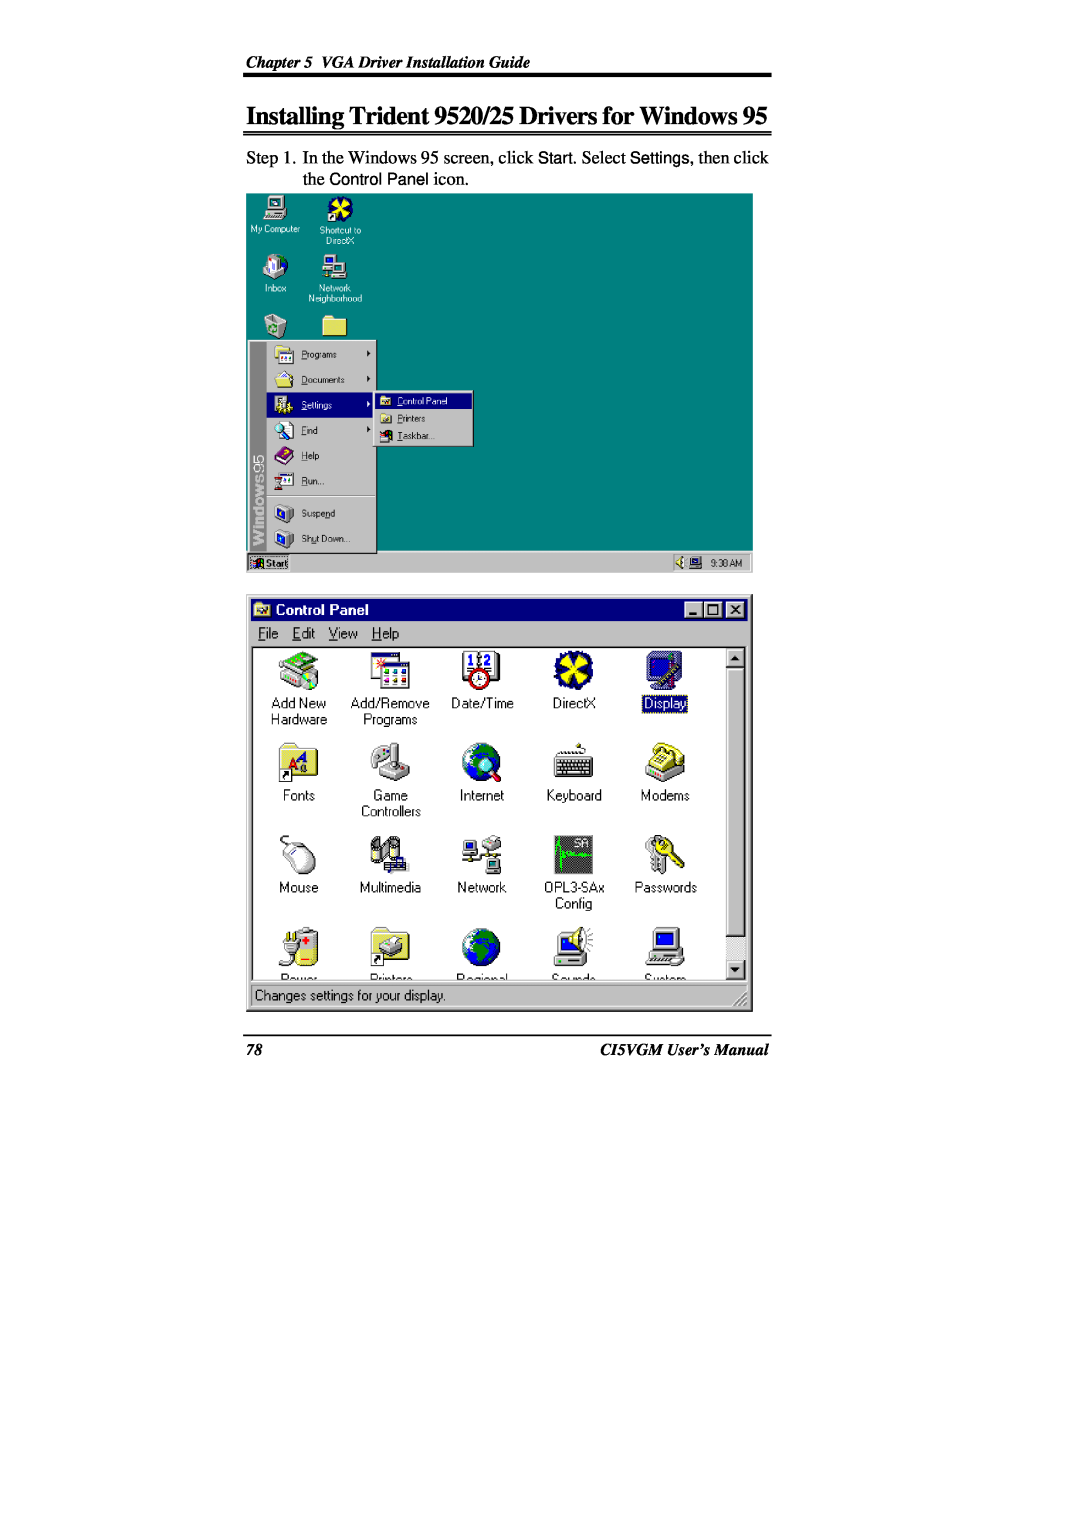 IBM CI5VGM Series Installing Trident 9520/25 Drivers for Windows, VGA Driver Installation Guide, CI5VGM User’s Manual 